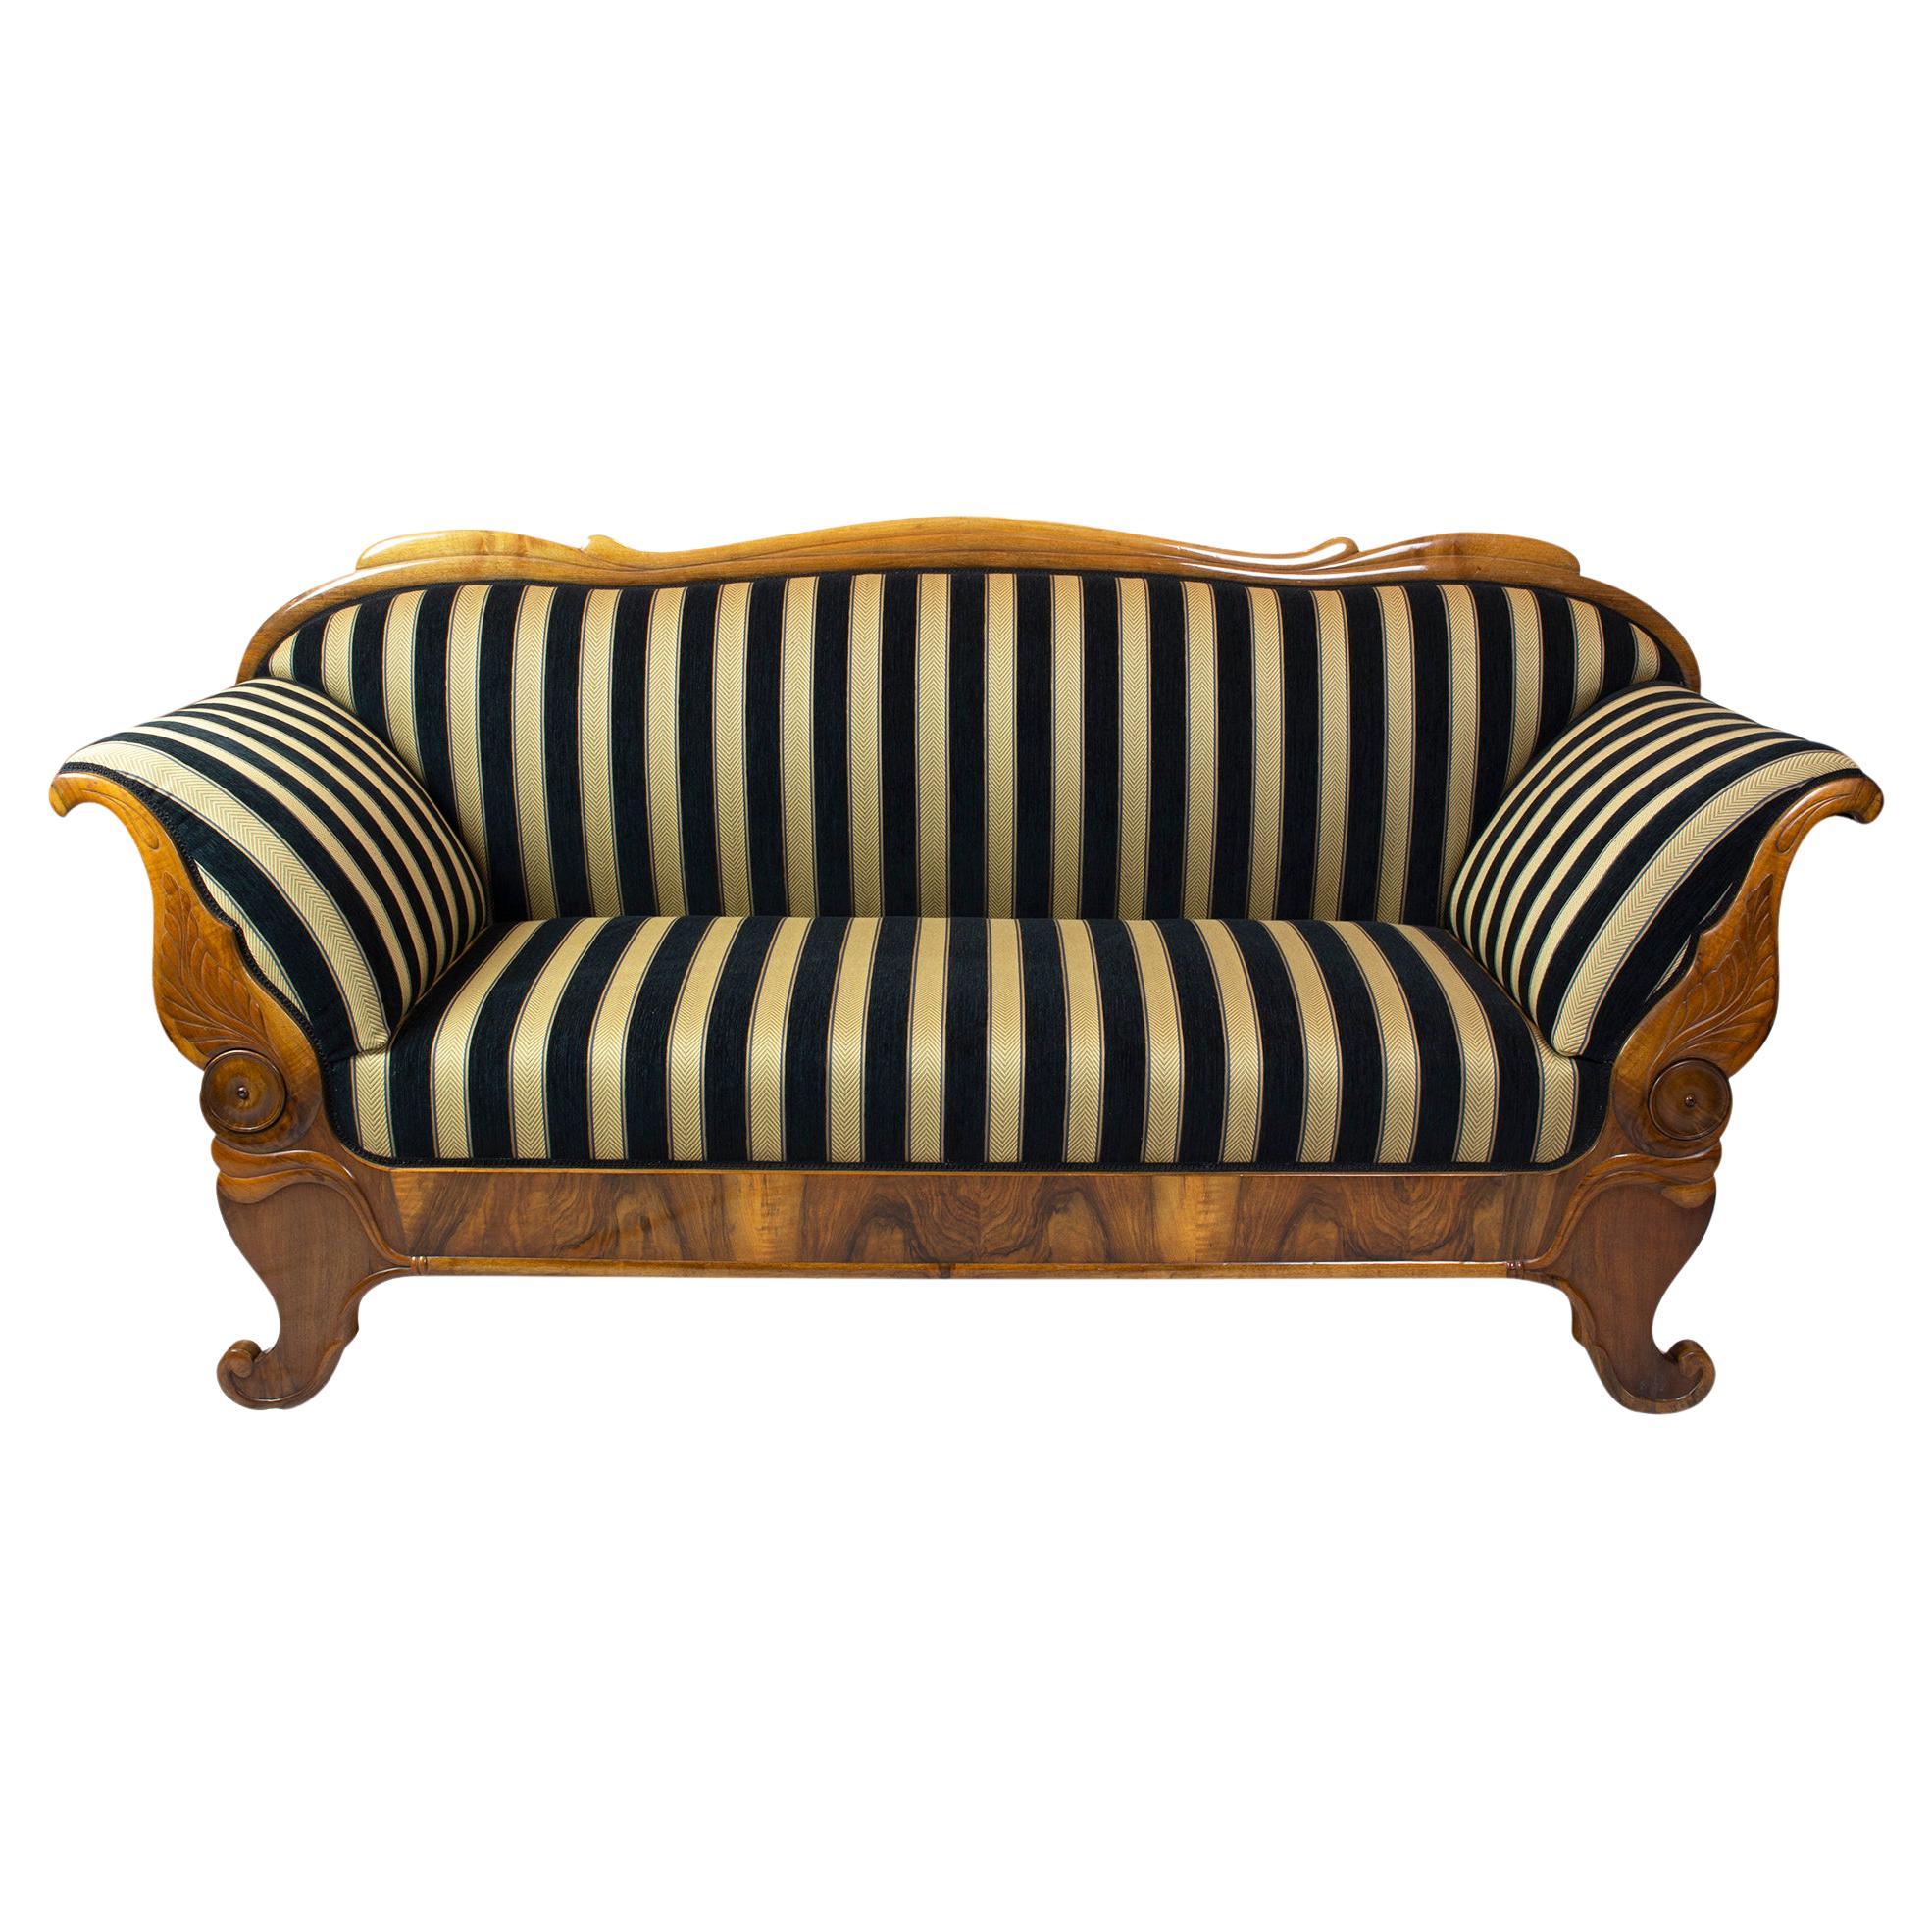 Early 19th Century Biedermeier Walnut Sofa from Germany For Sale